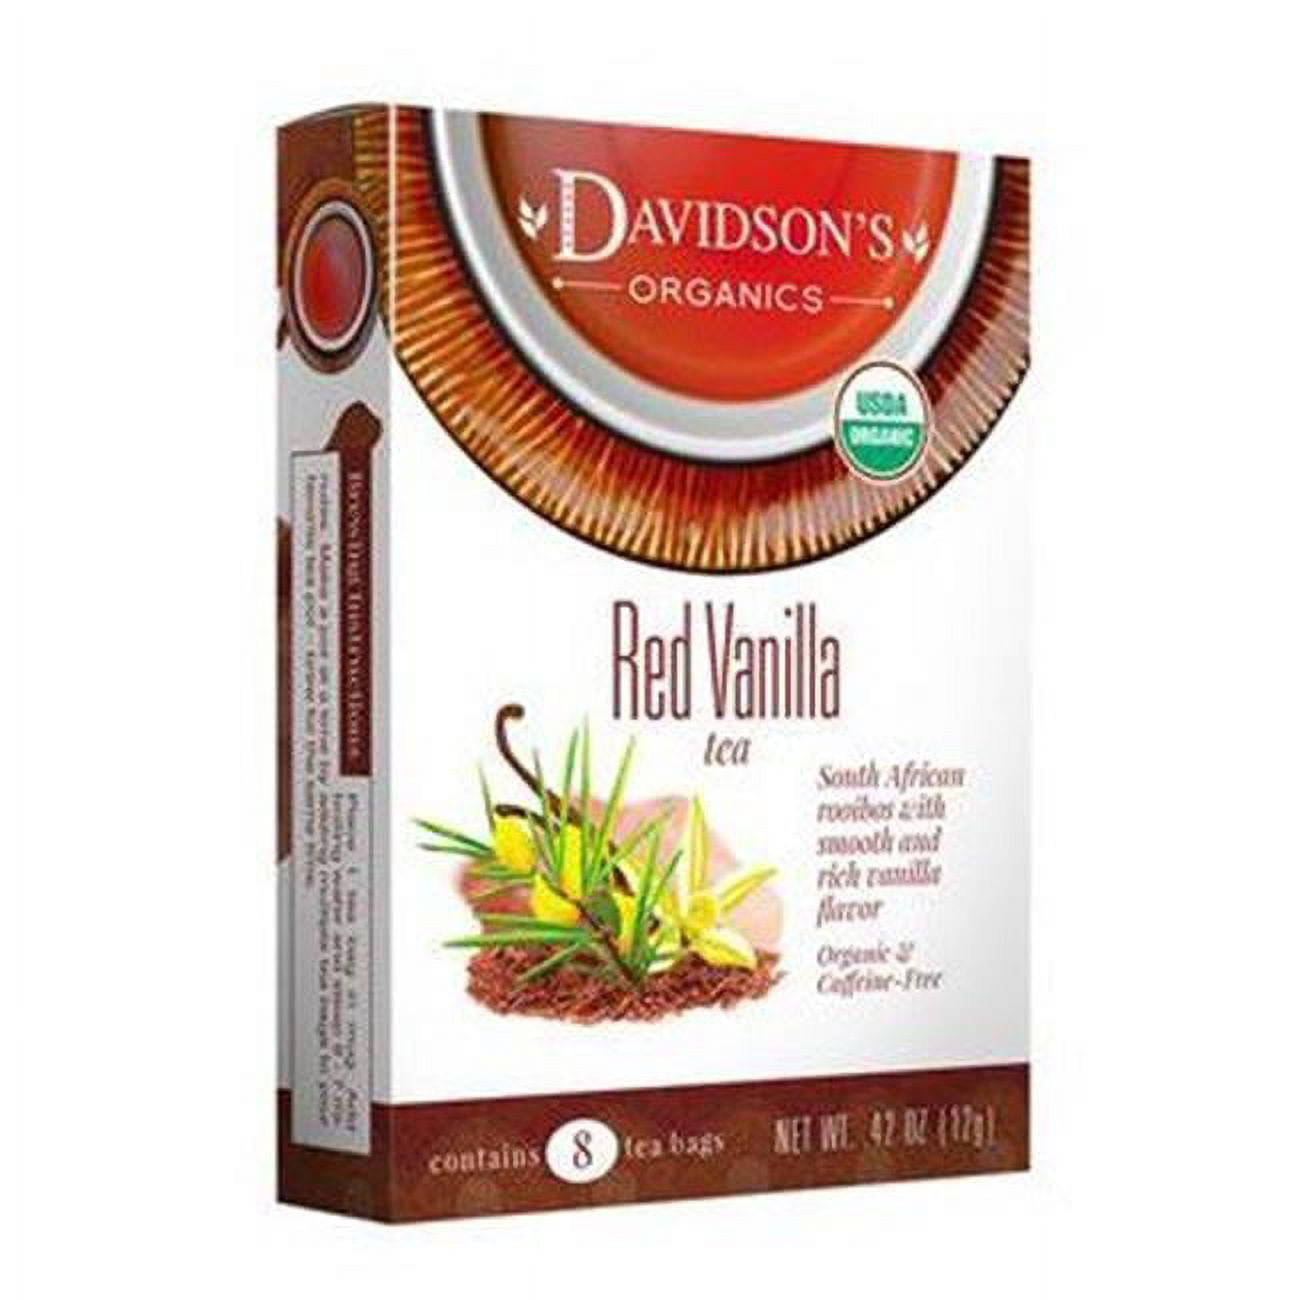 Picture of Davidsons Organics 7102 2 oz Red Vanilla Sampler Tea - Pack of 6